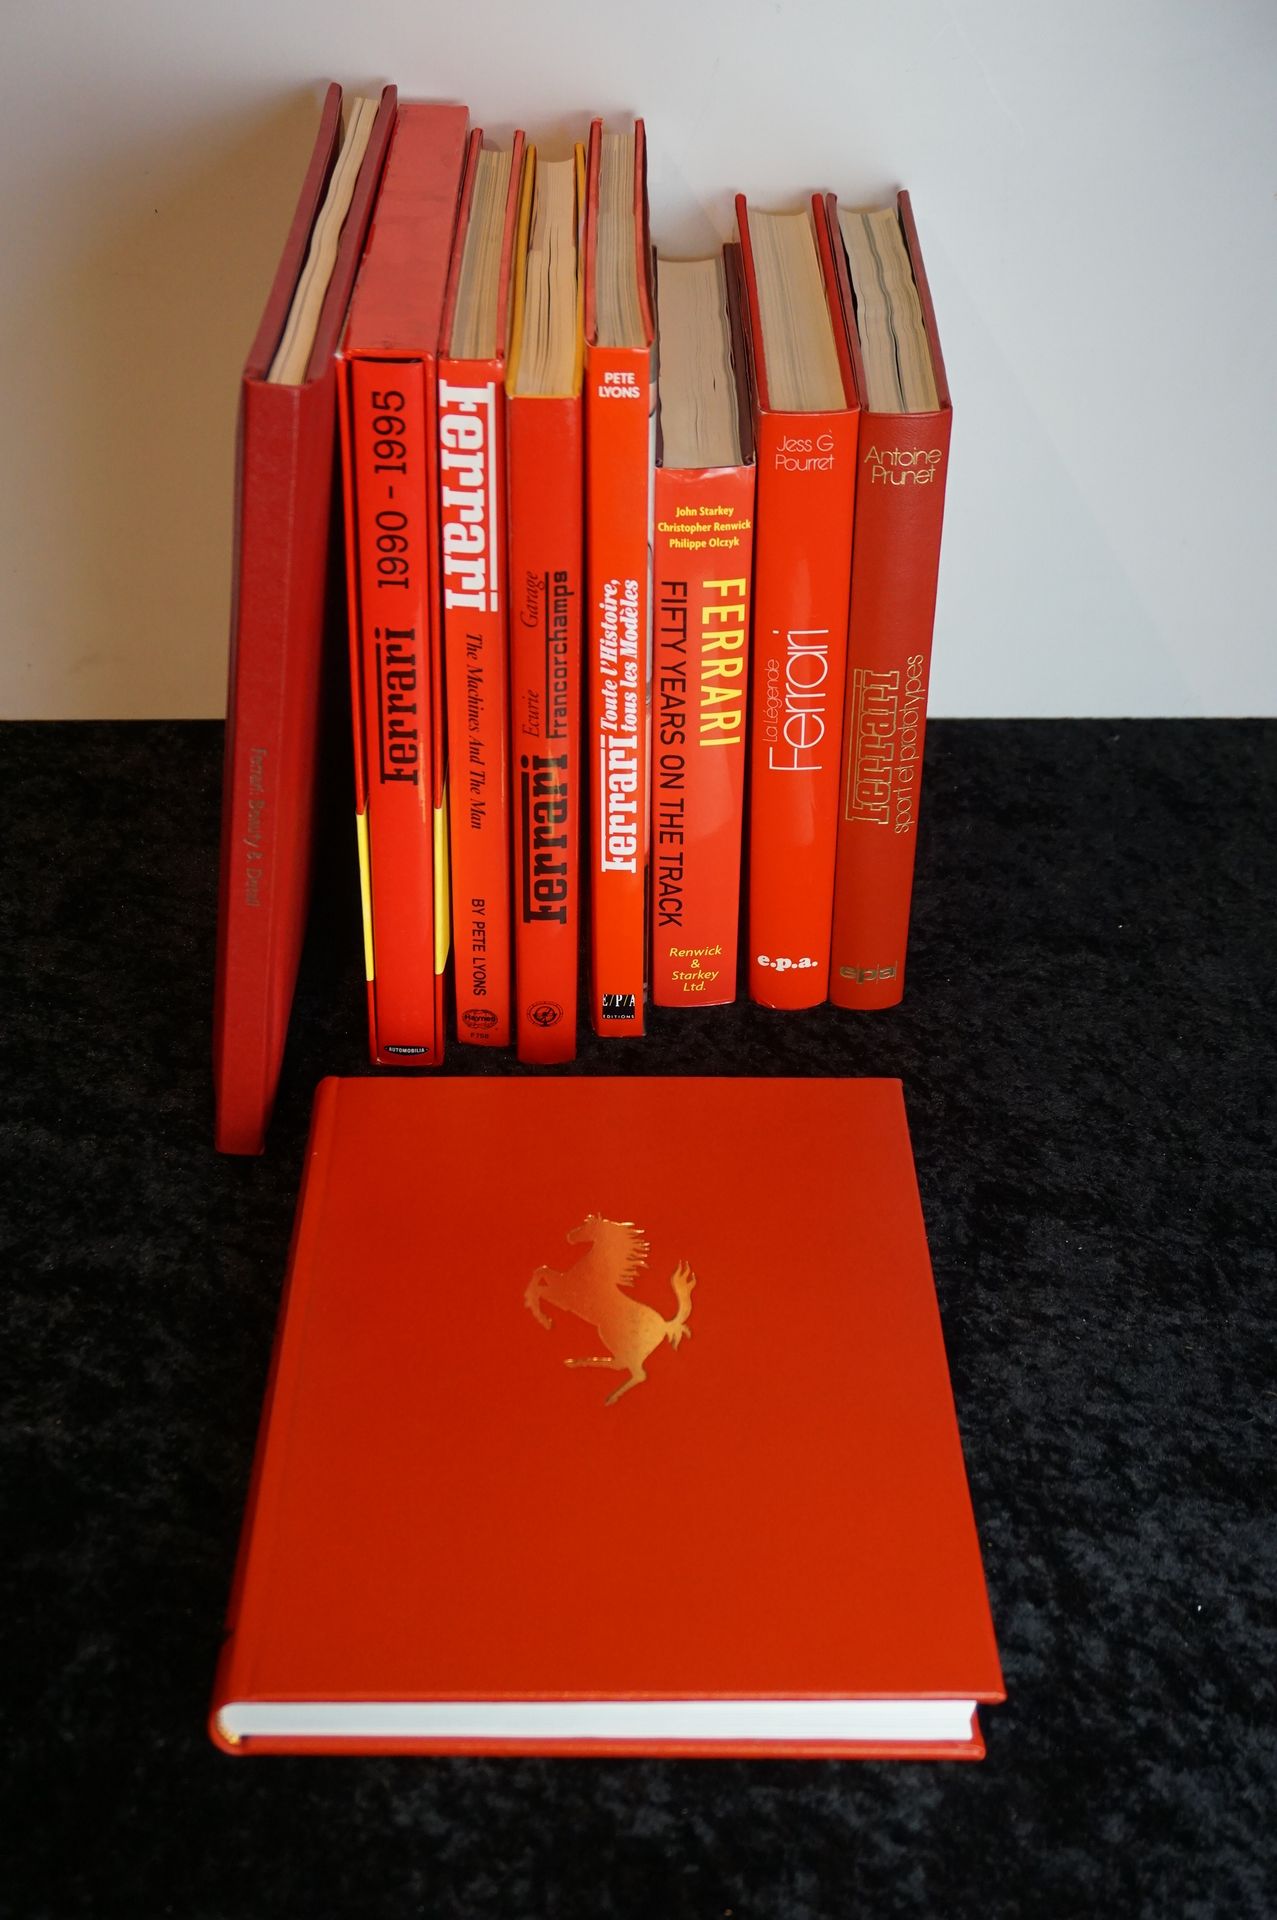 Null Libros Ferrari :
- Ferrari, La Leyenda ; Ed e.P.A : Jess G Pourret
- Ferrar&hellip;